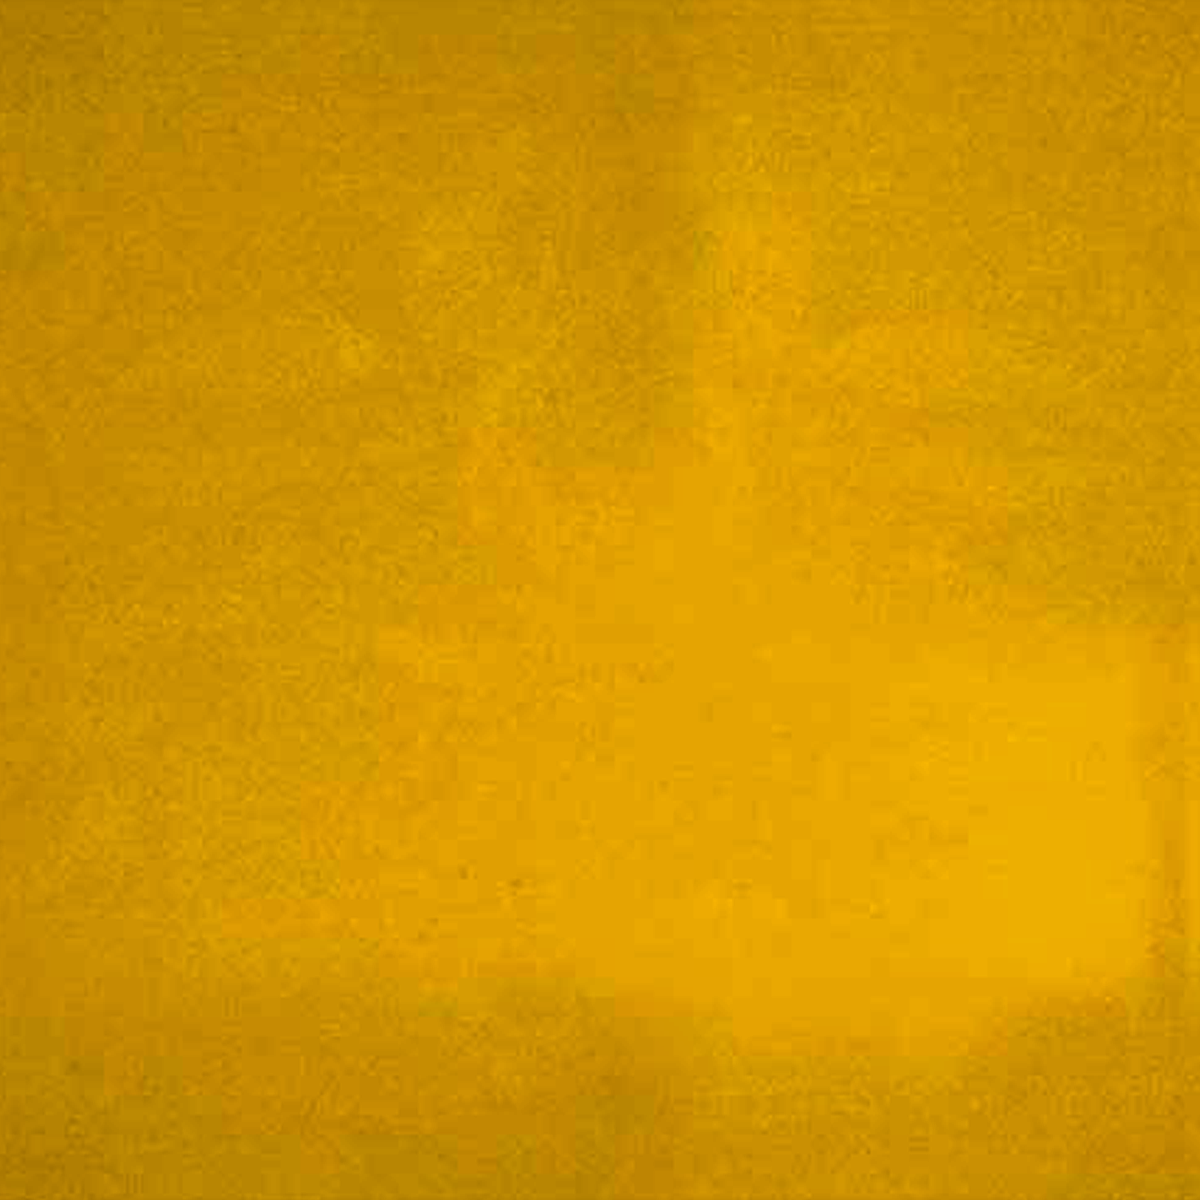 Radnor X 6 14 MIL Yellow Transparent Vinyl Replacement Welding Screen 